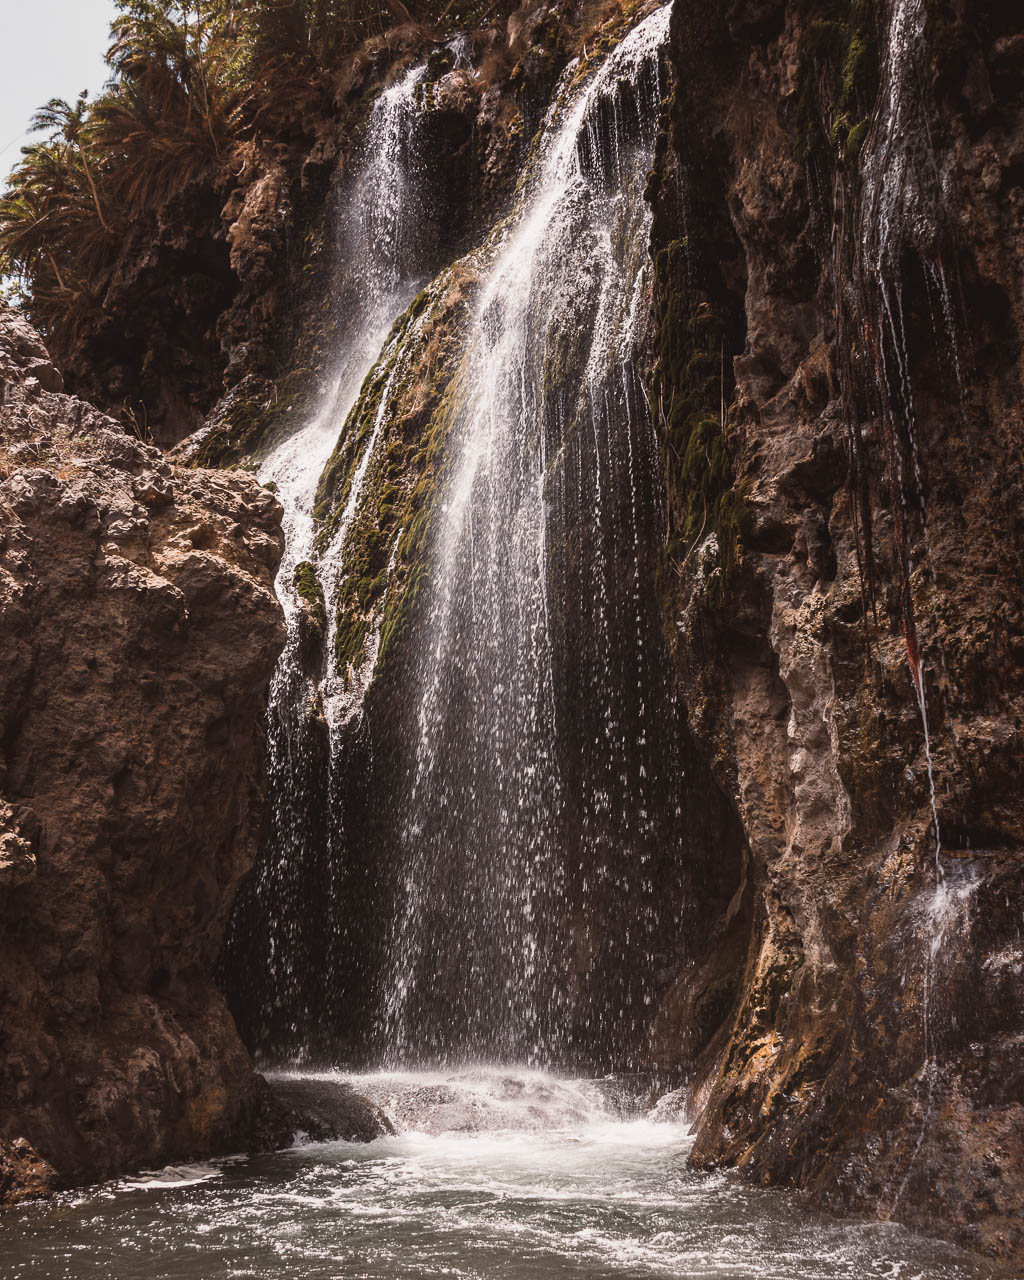 Ngaresero waterfall